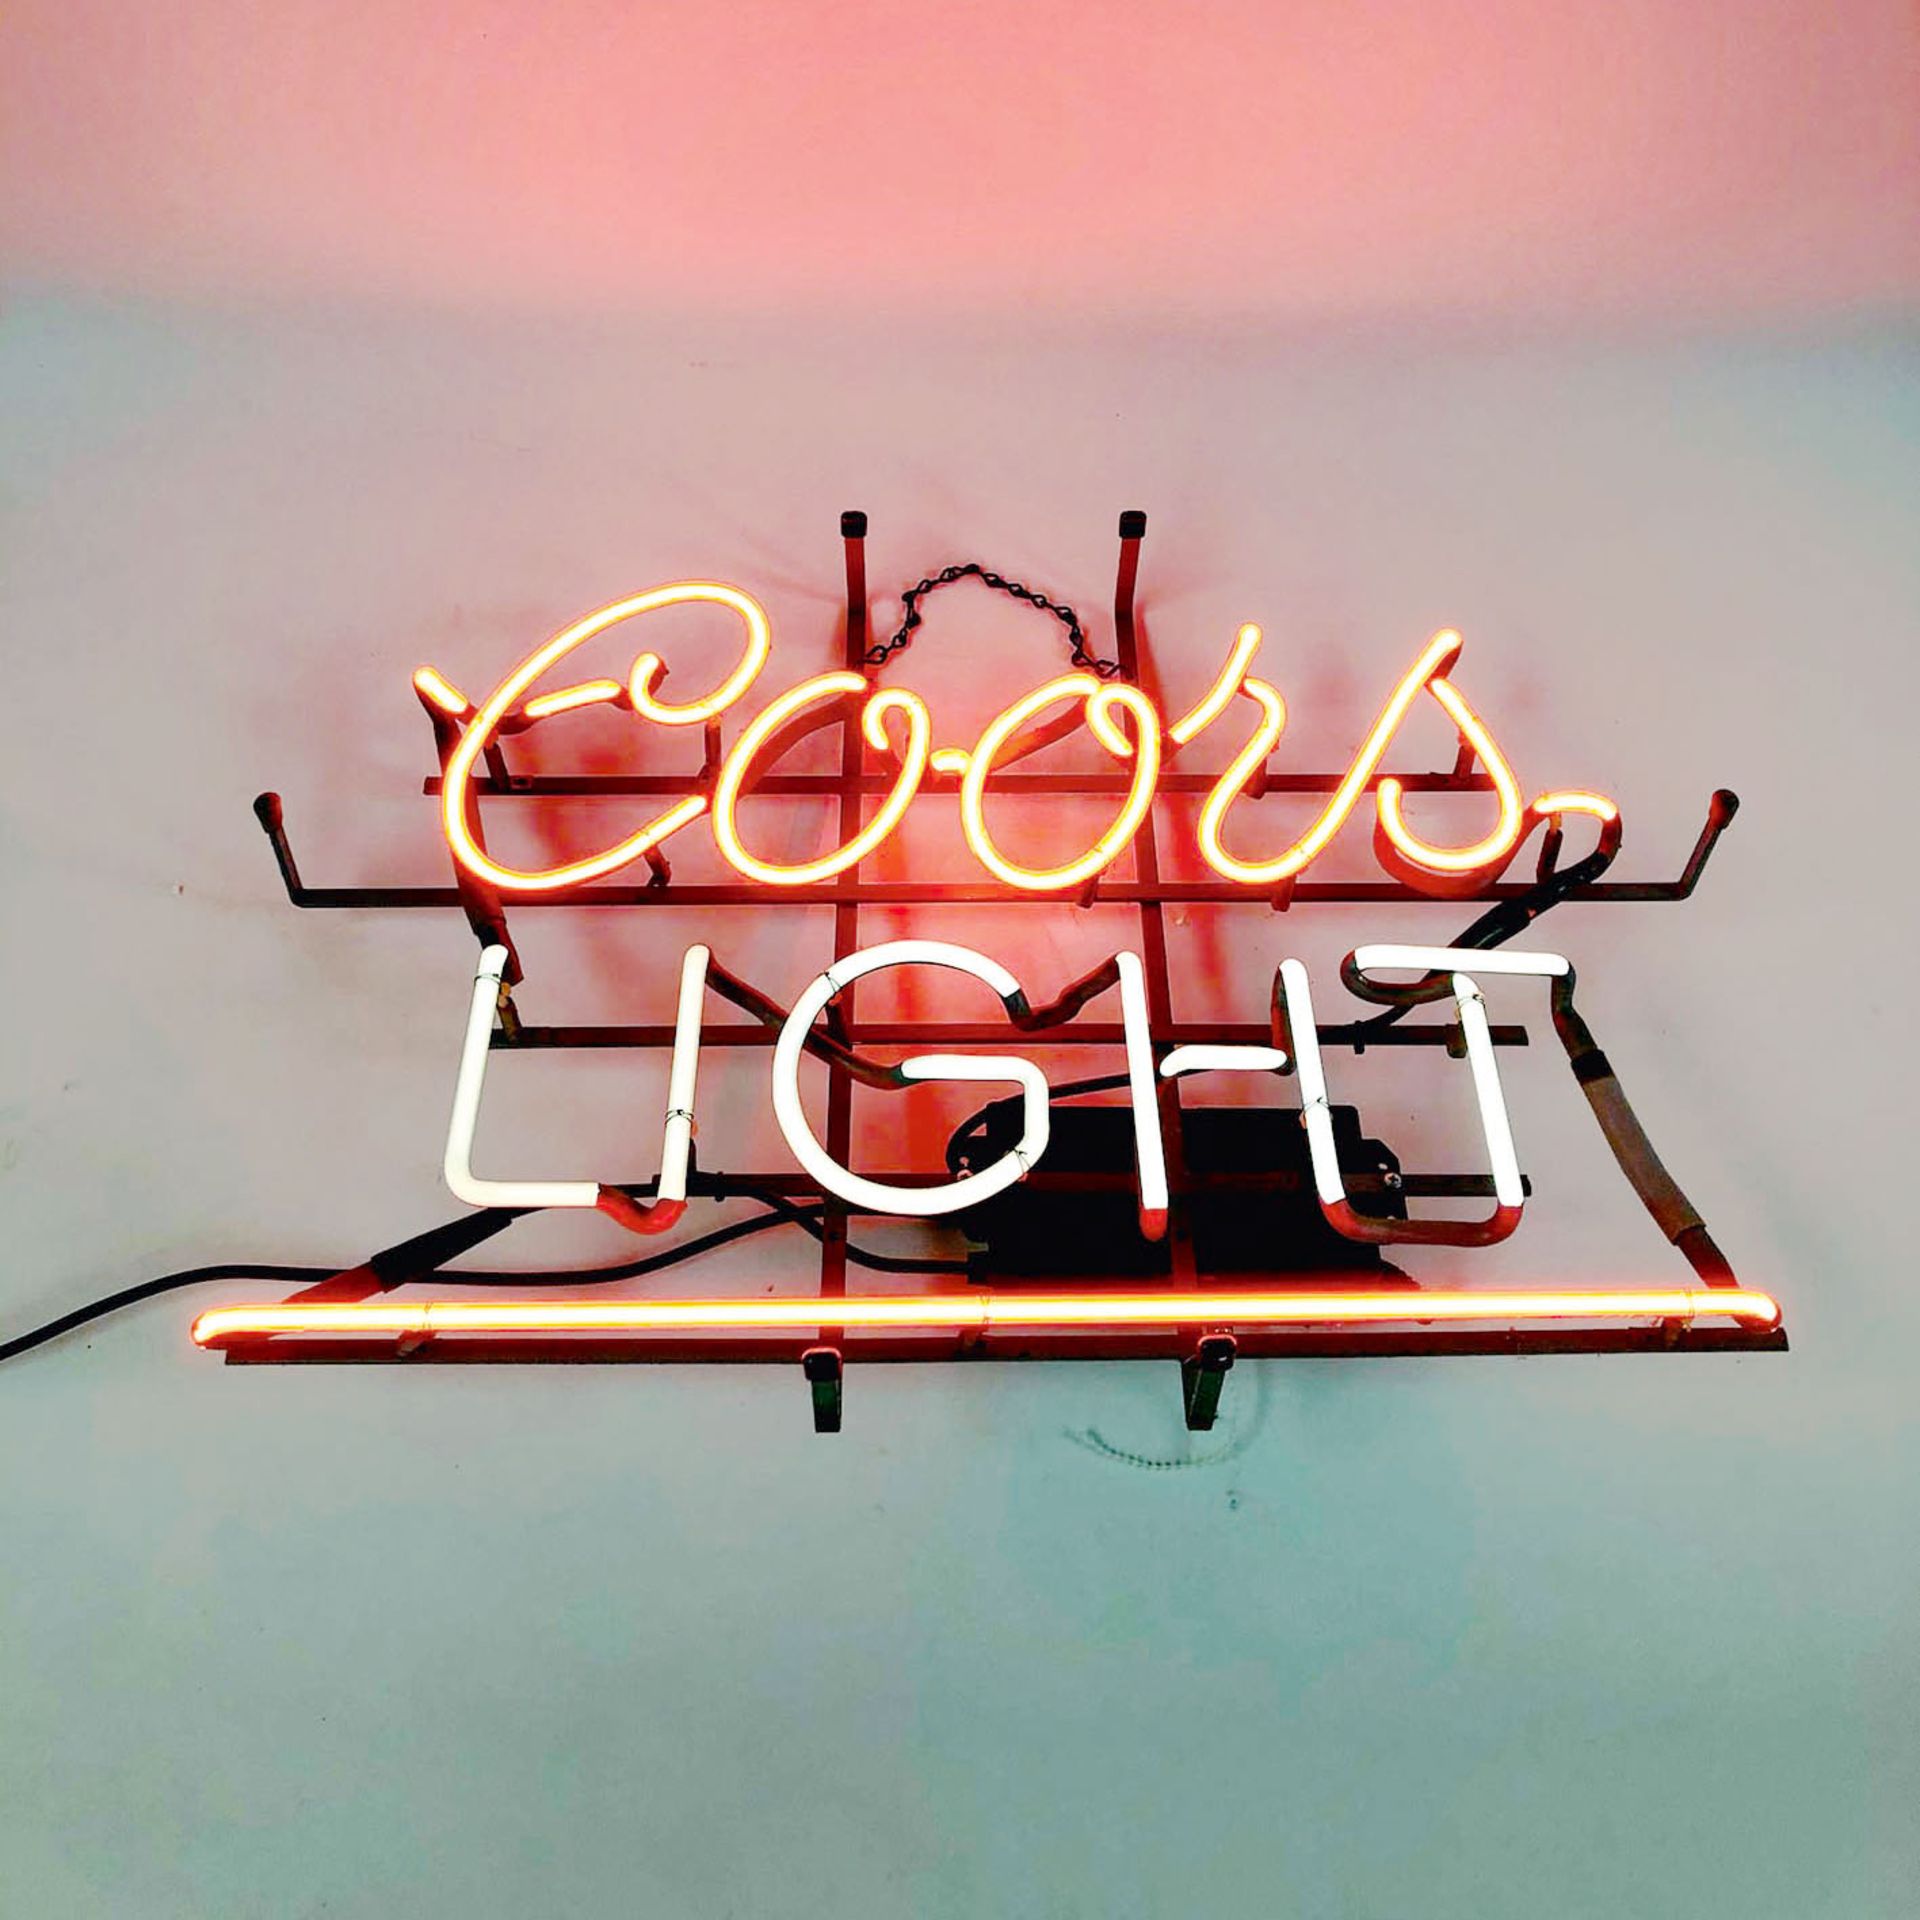 Original Coors Light Neon Sign - Image 2 of 2